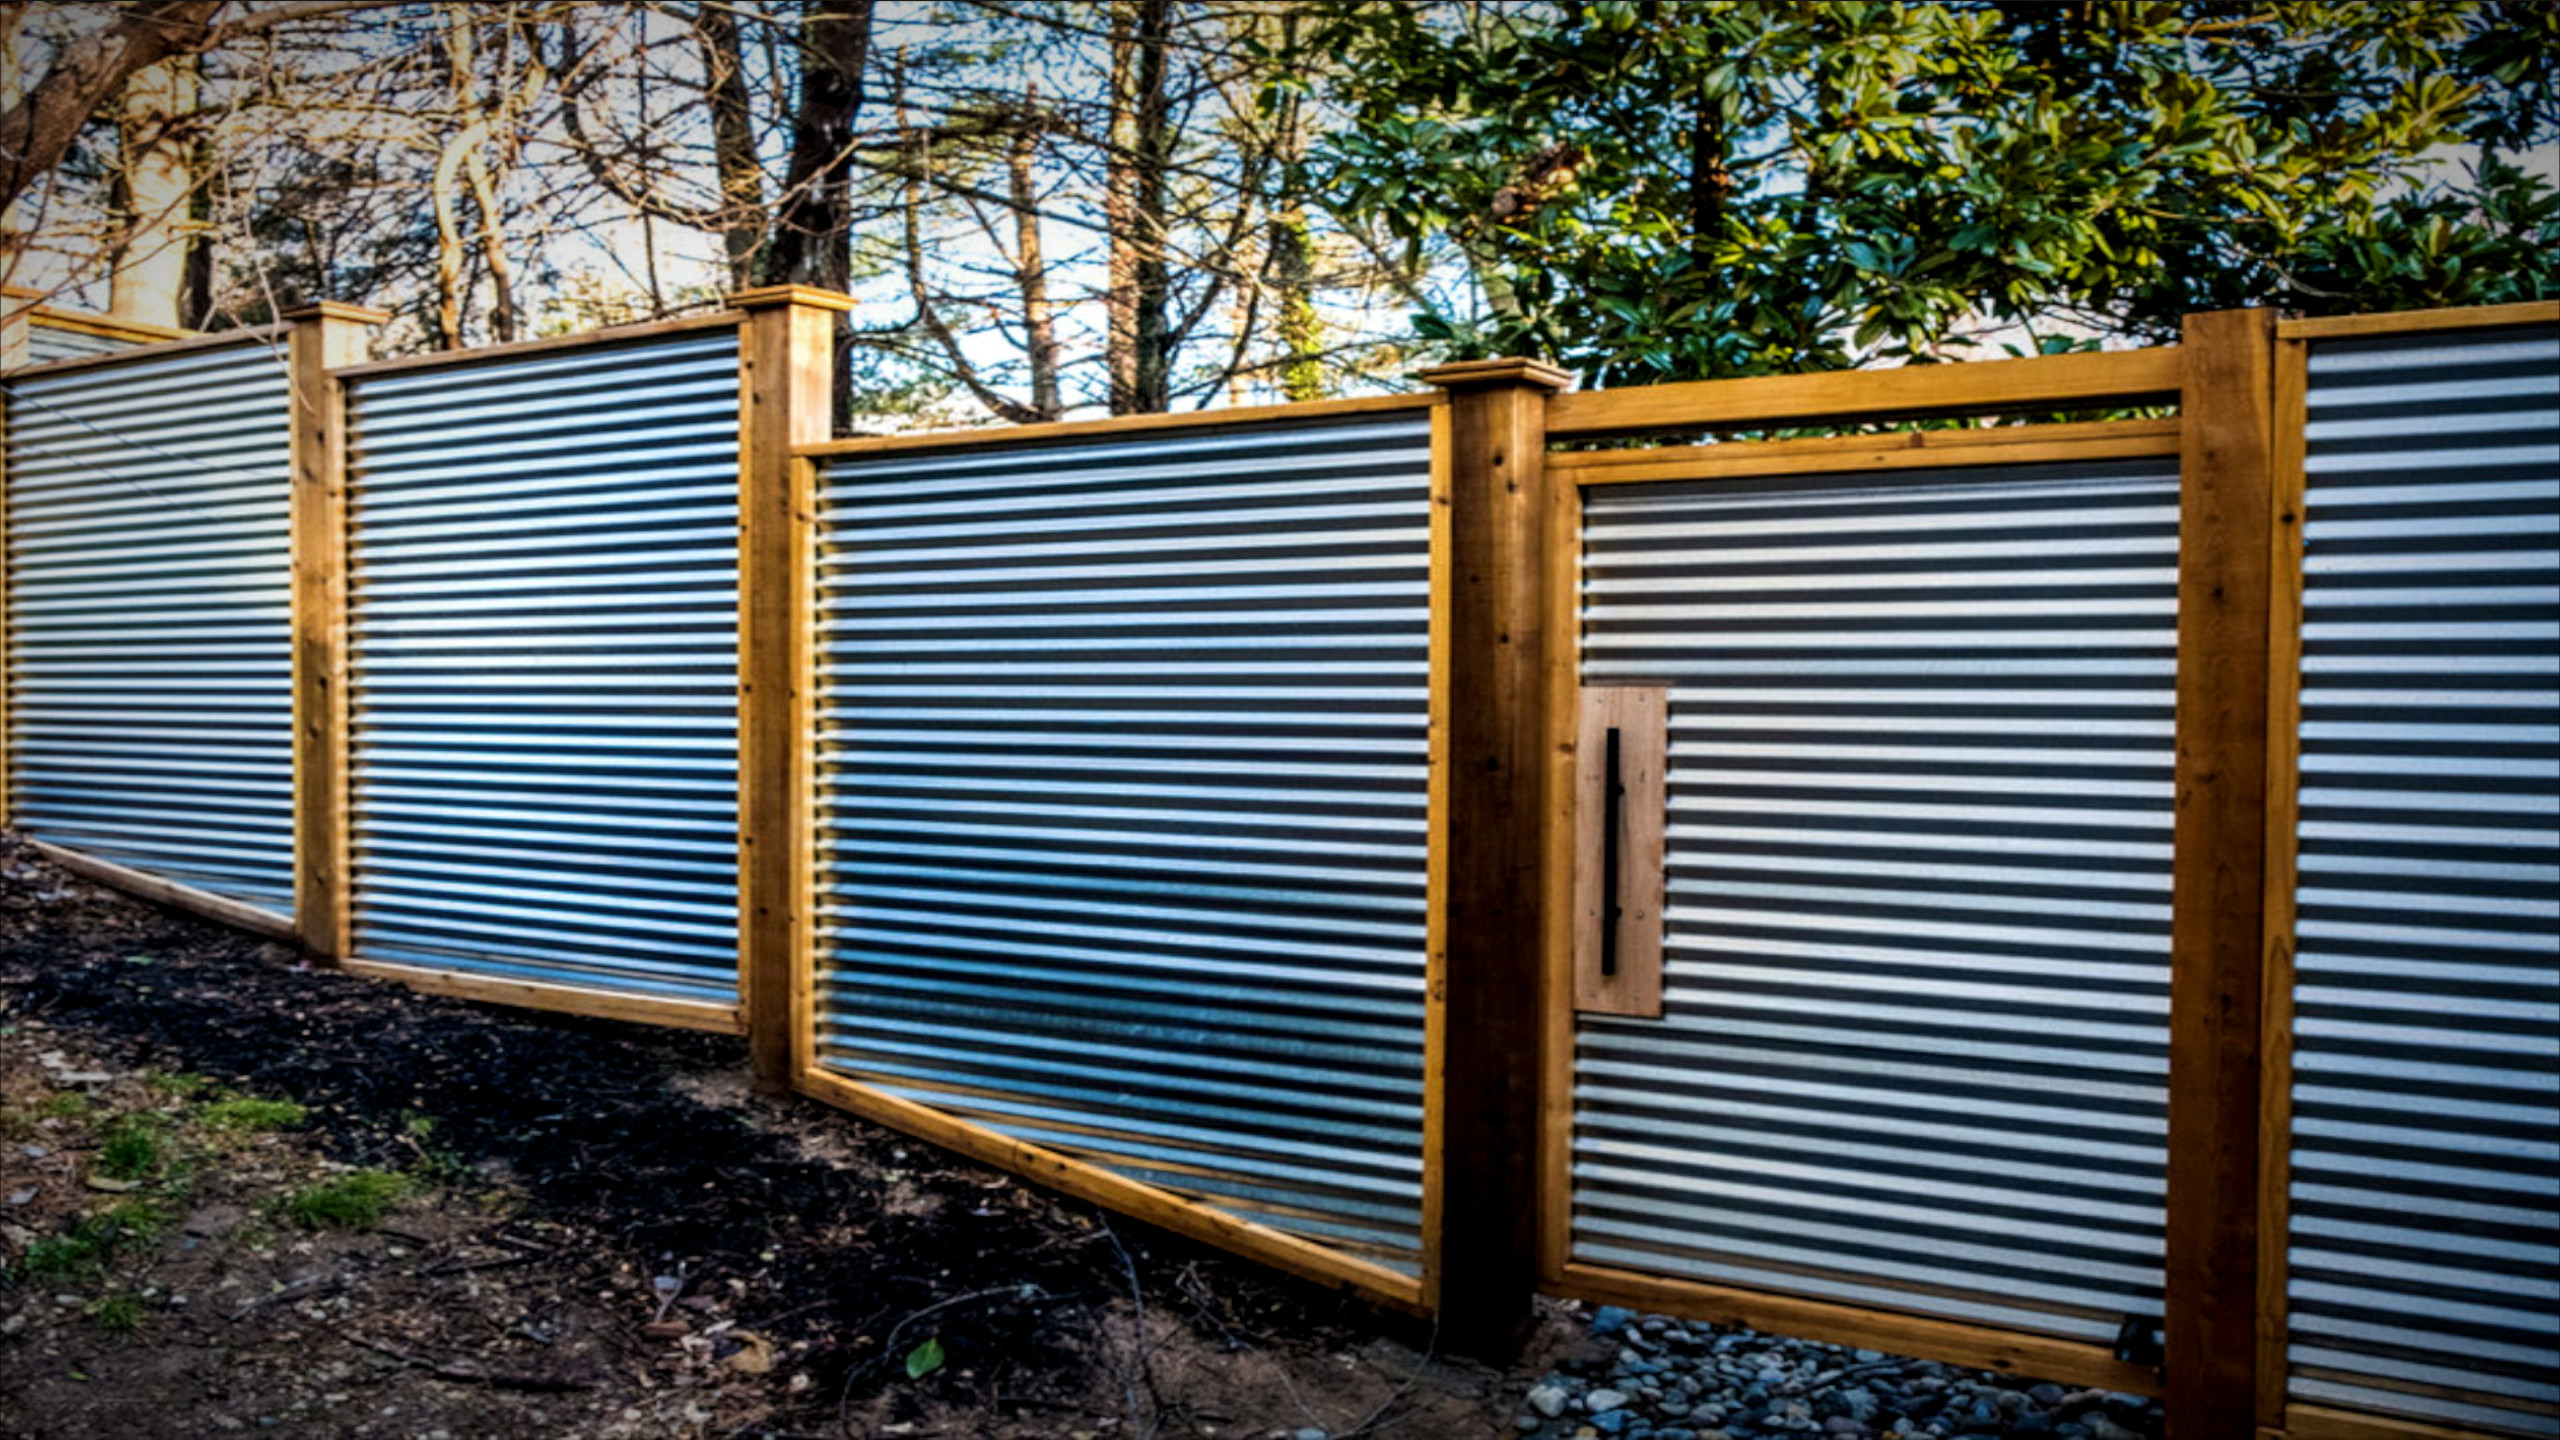 Corrugated metal fence